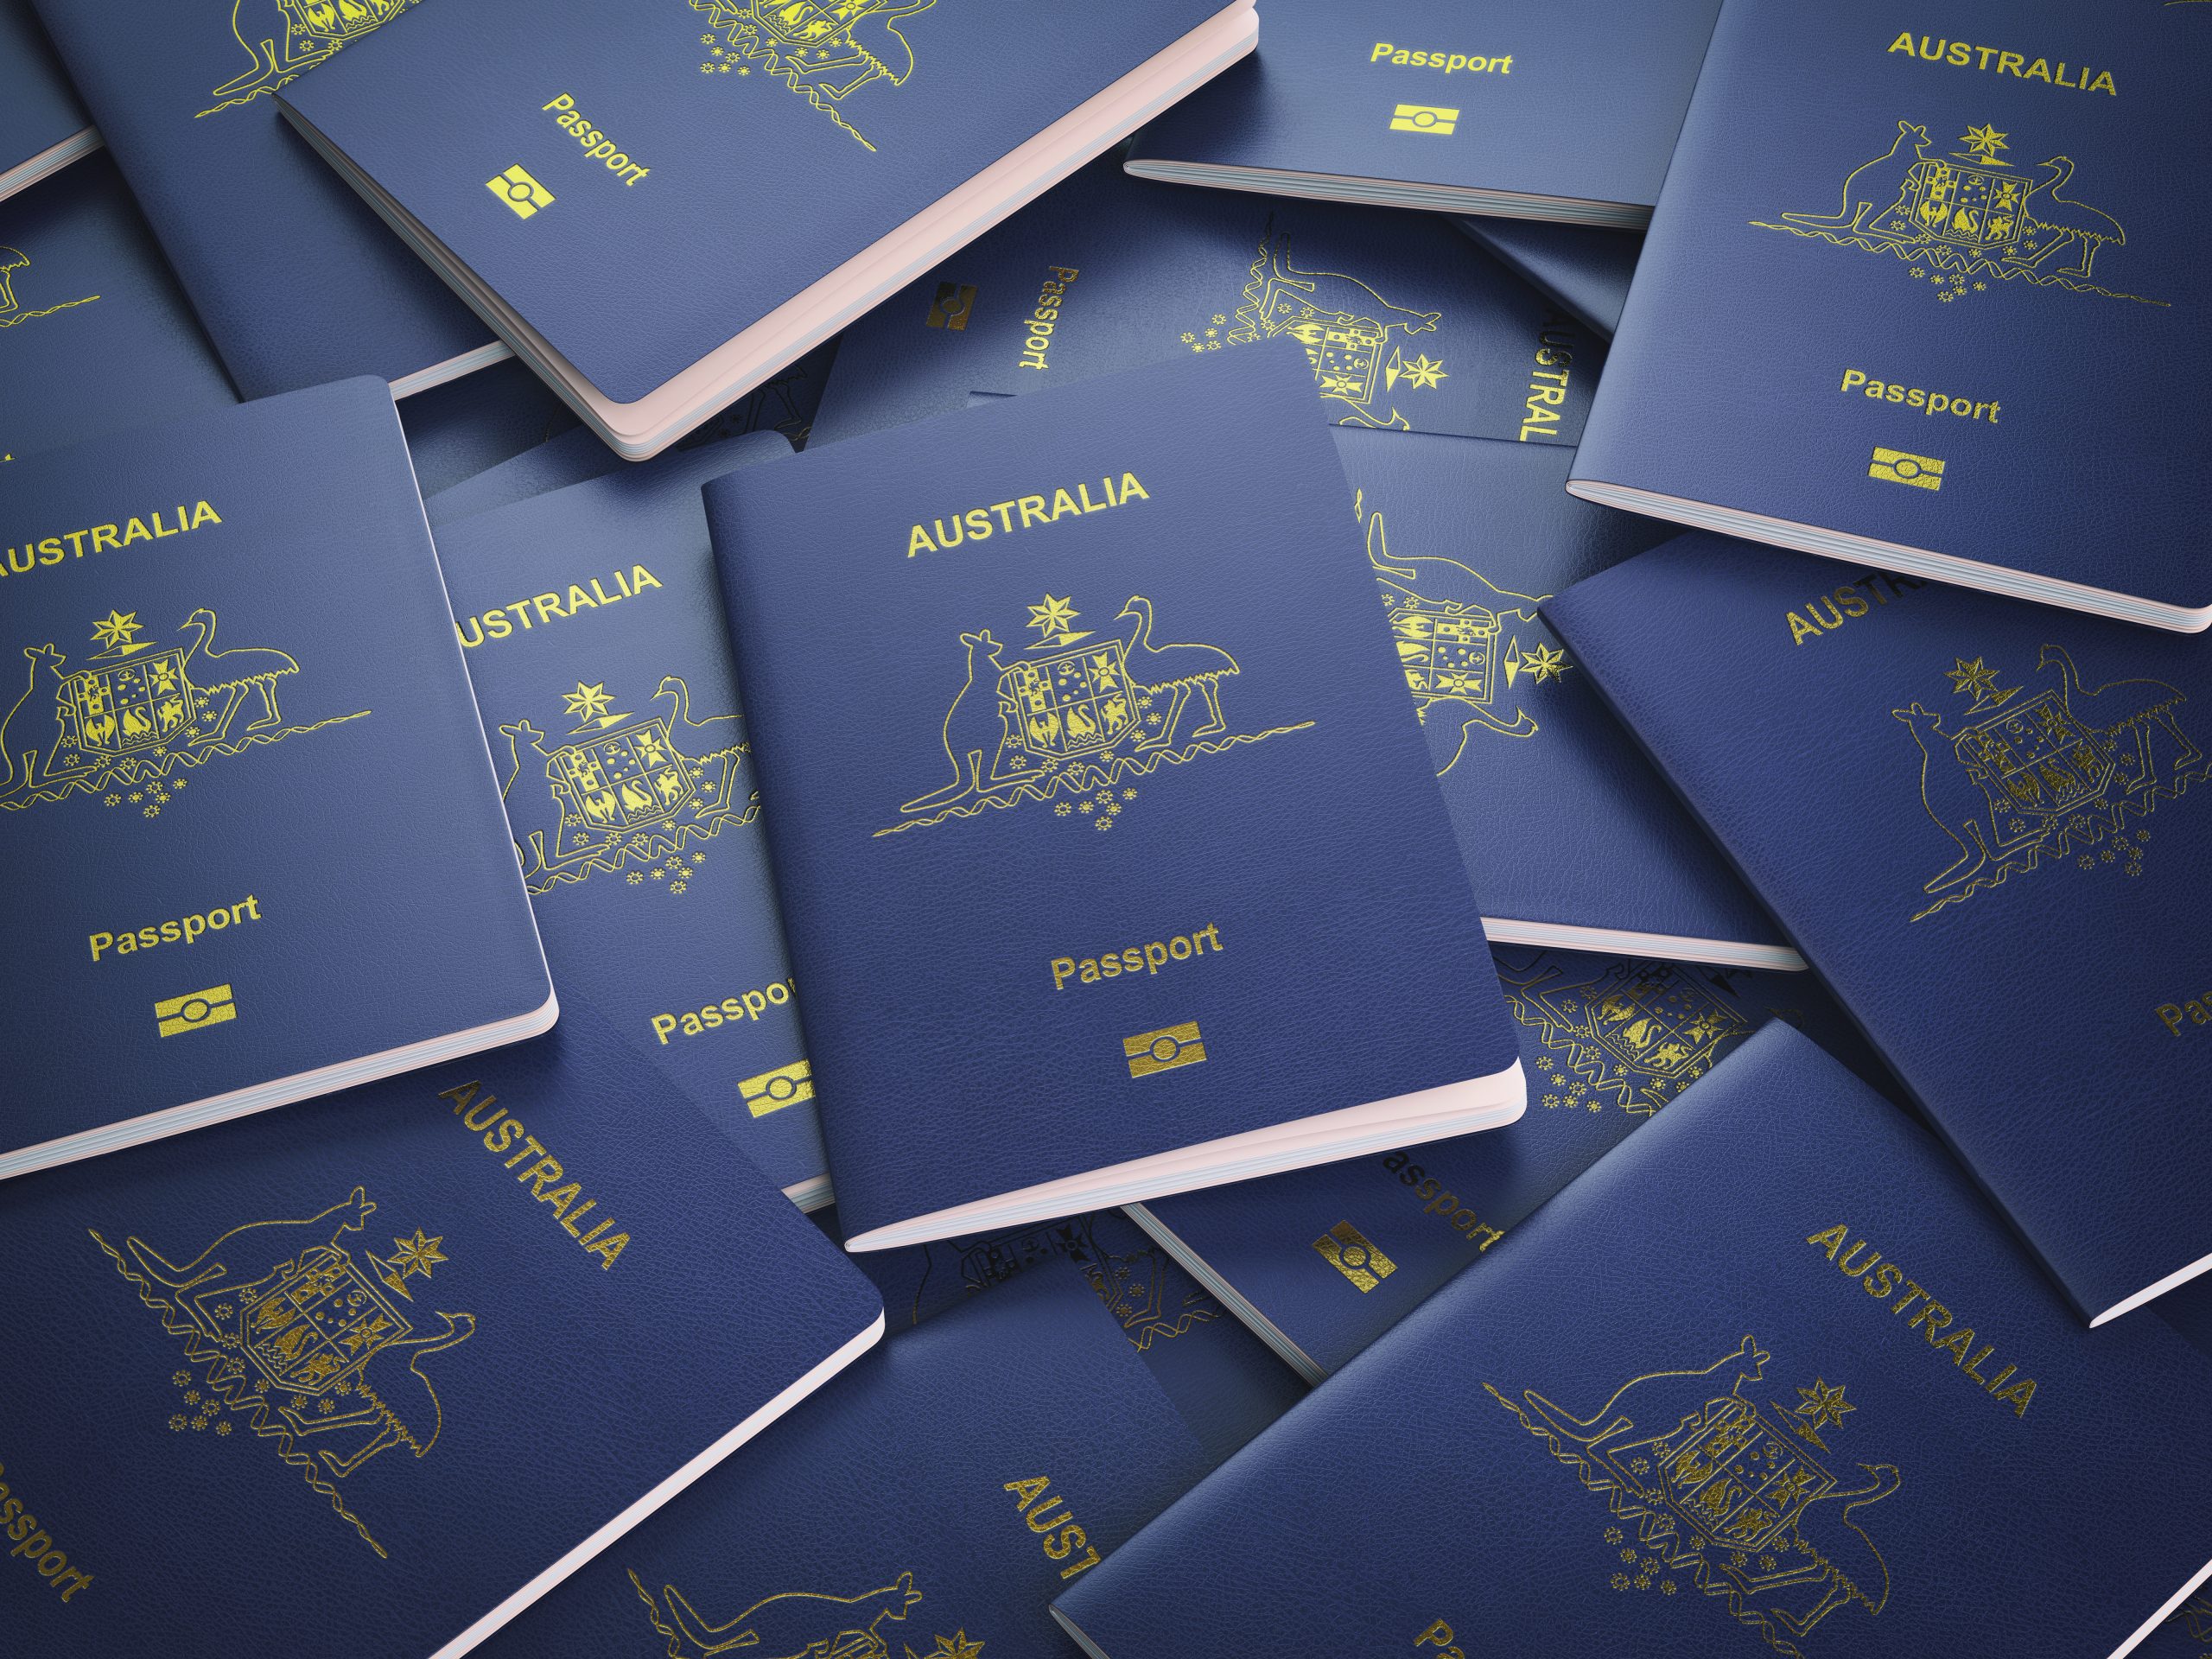 7 Mistakes to avoid when applying for the new 491 Regional Visa in Australia